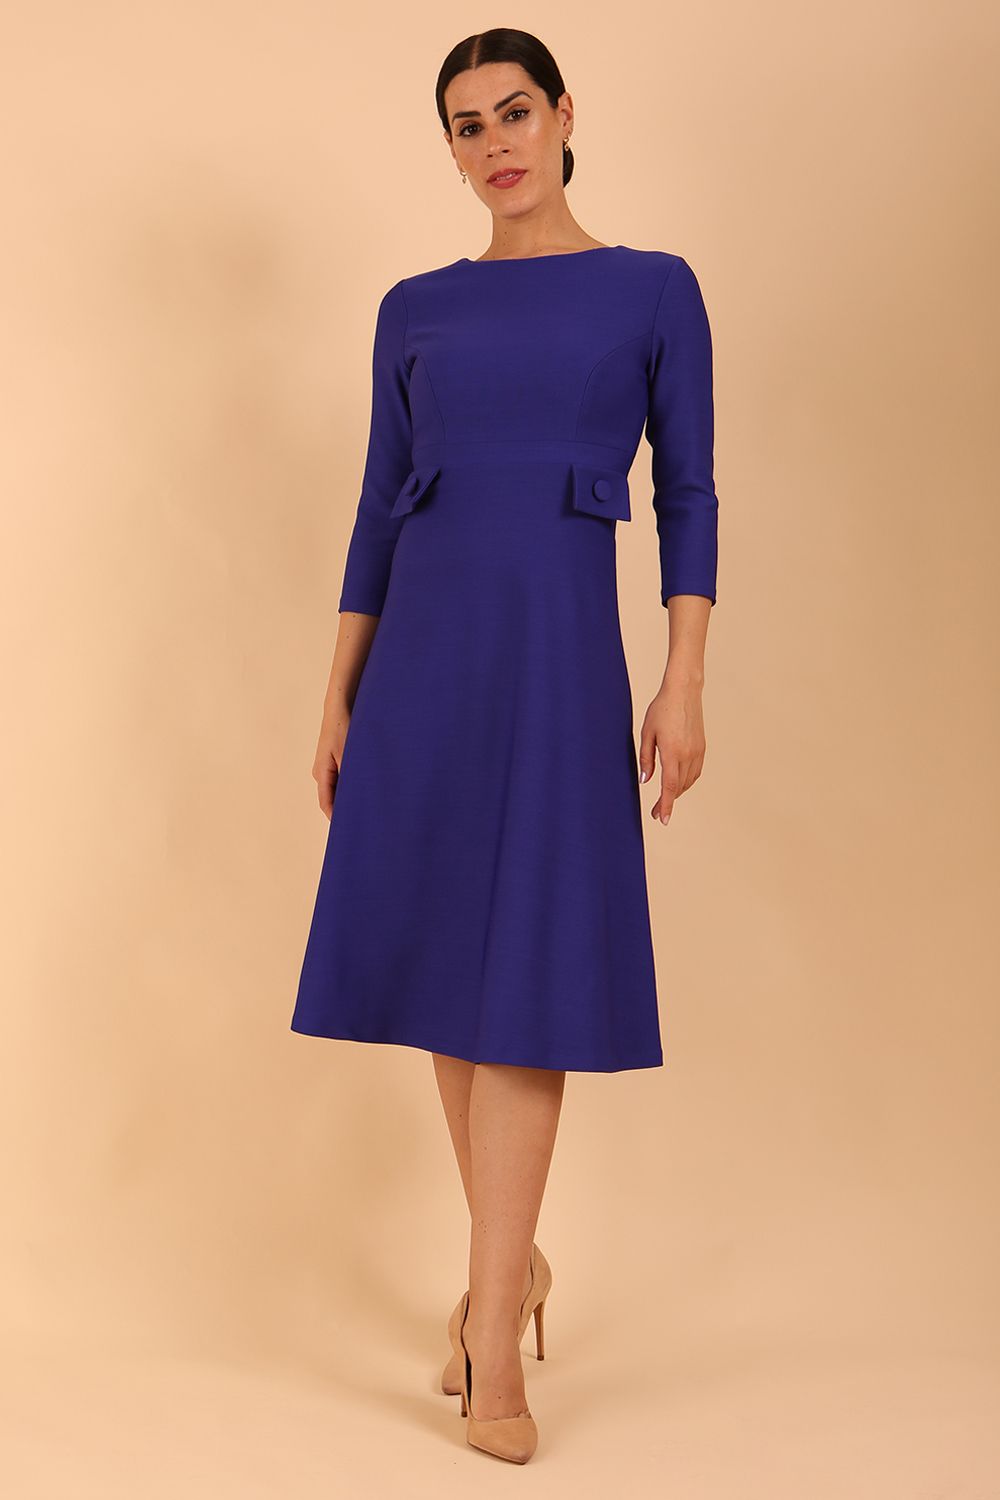 Model wearing diva catwalk Gresham 3/4 Sleeve Knee Length A-Line Dress in Palace Blue  front